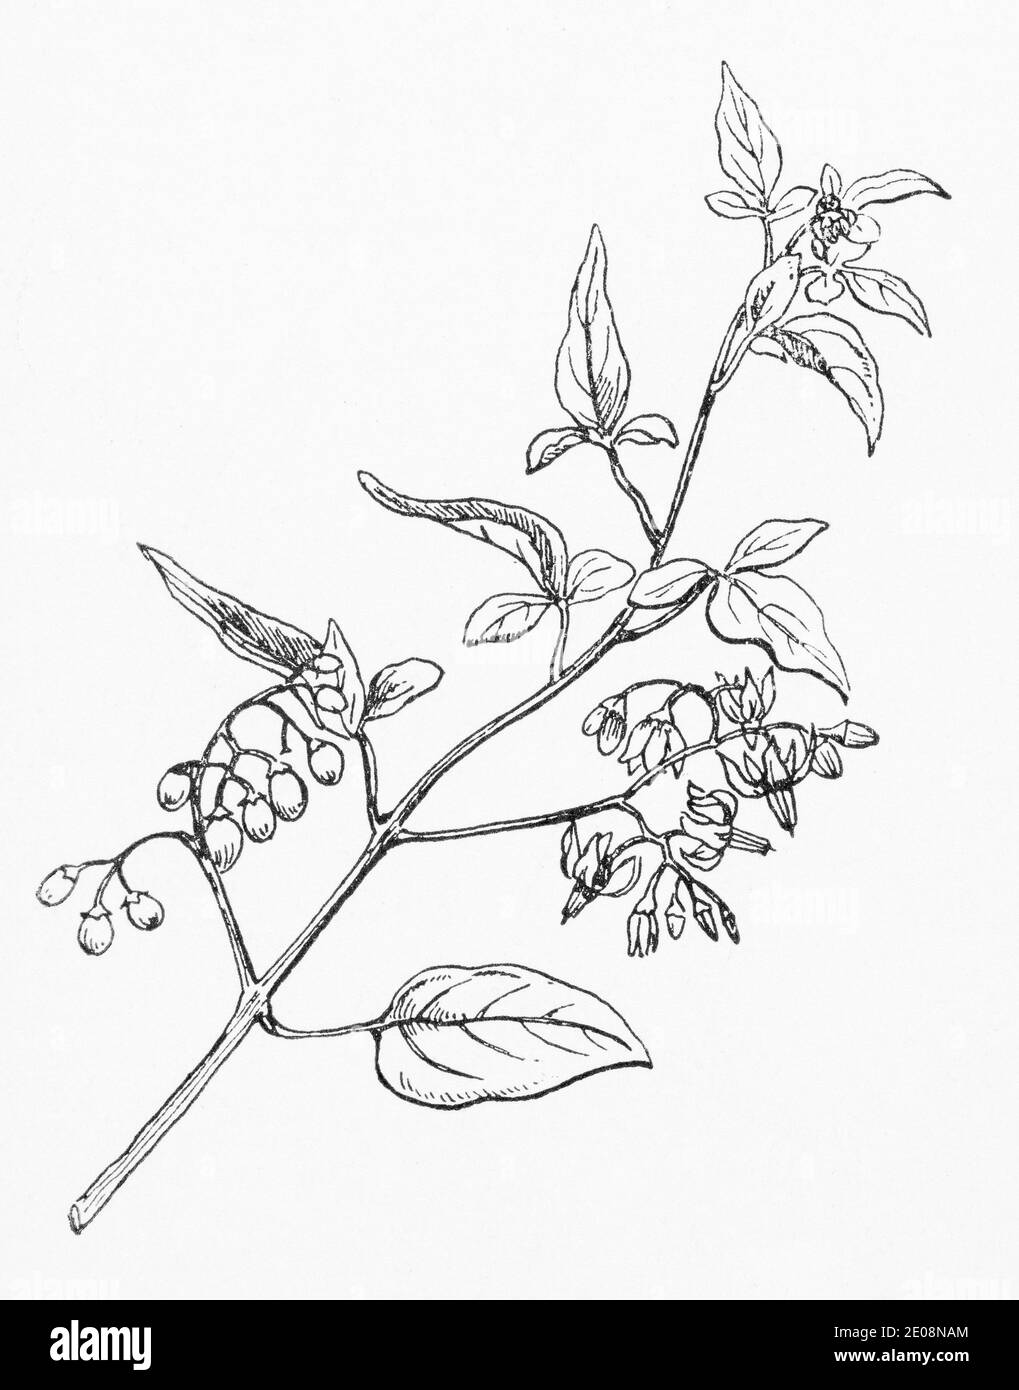 Old botanical illustration engraving of Solanum dulcamara / Woody Nightshade. Traditional medicinal herbal plant. See Notes Stock Photo